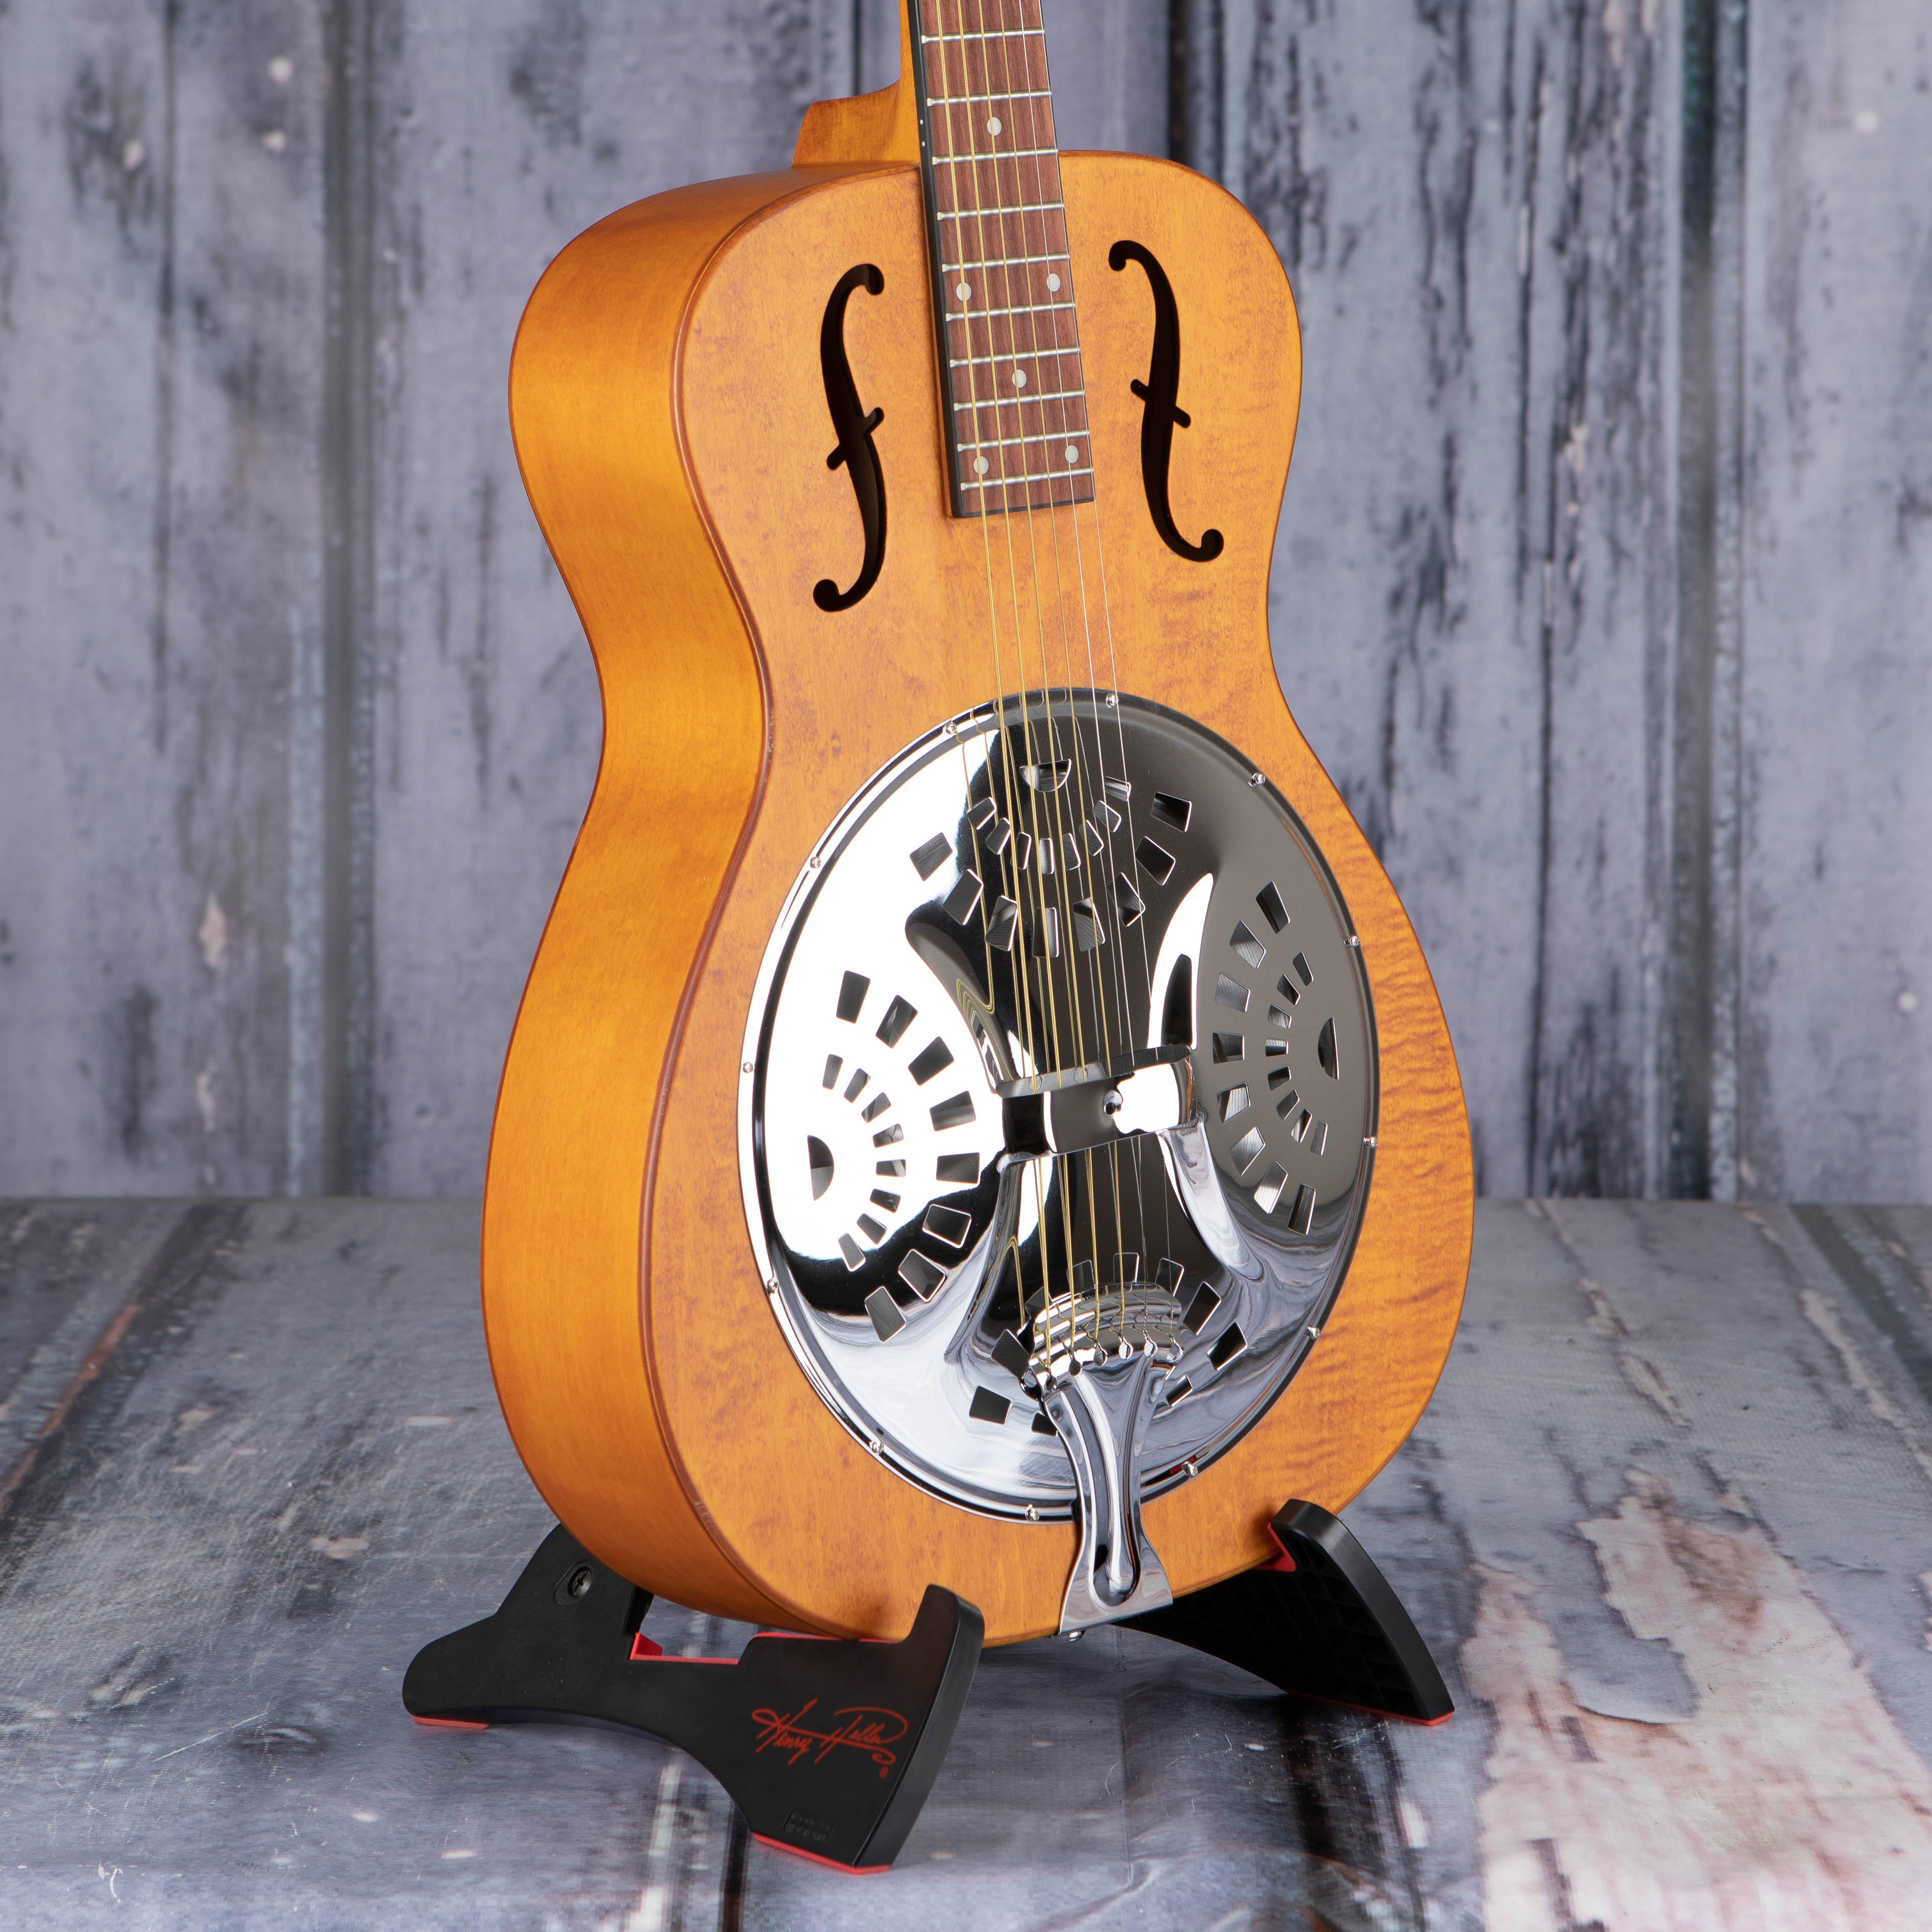 Epiphone Dobro Hound Dog Round Neck Resonator Guitar, Violinburst, angle